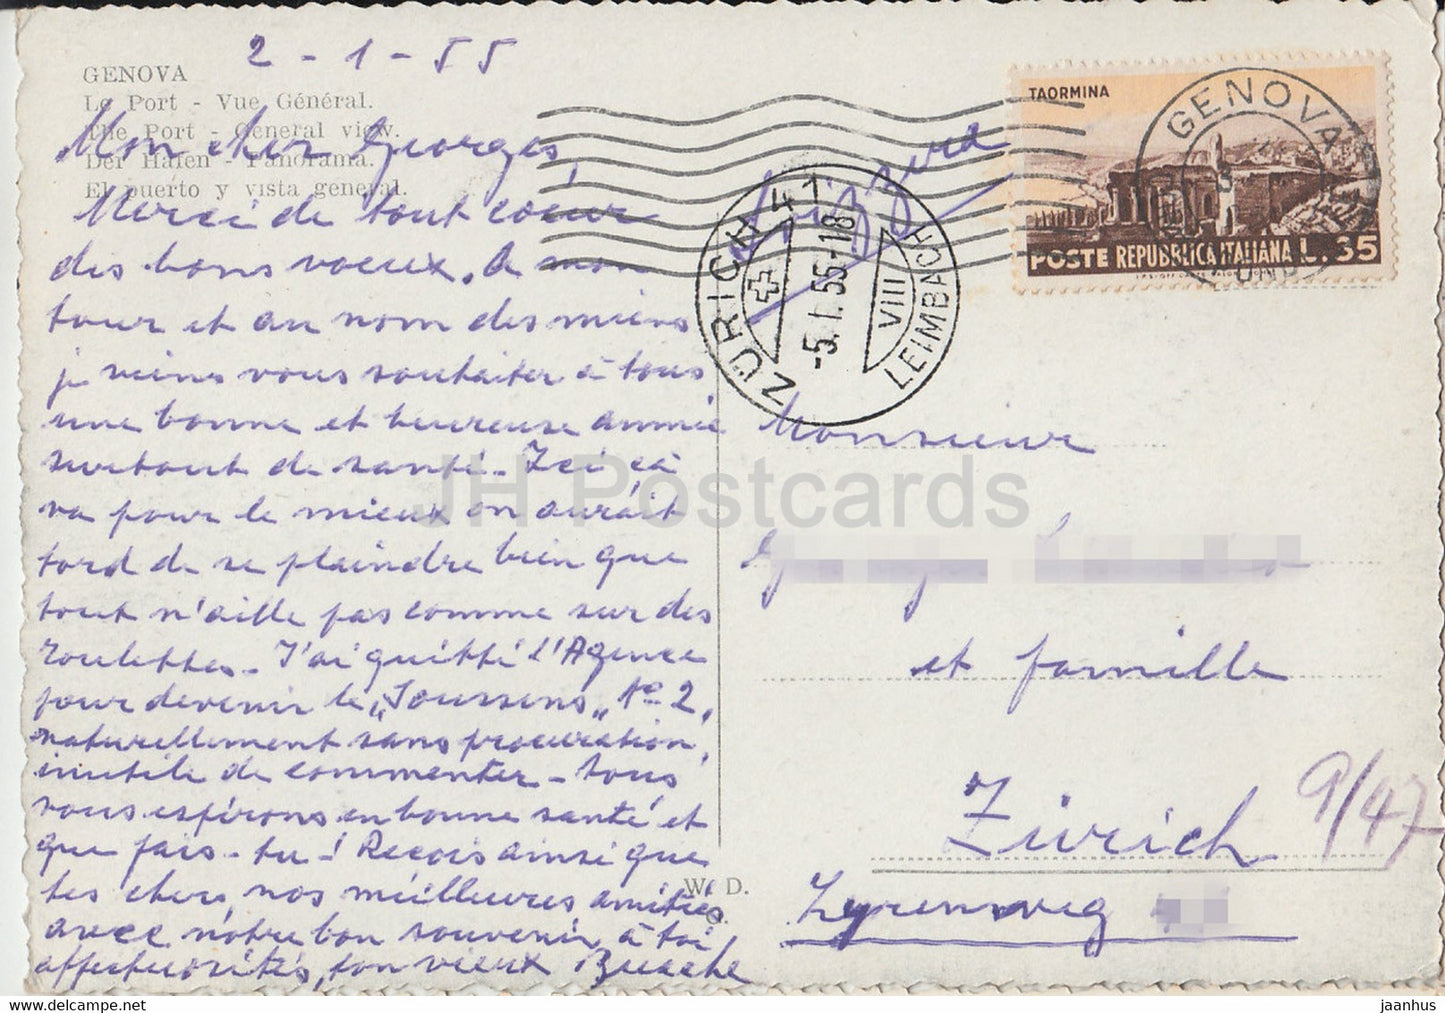 Genova - Gênes - Veduta del Porto - port - navire - carte postale ancienne - 1955 - Italie - utilisé